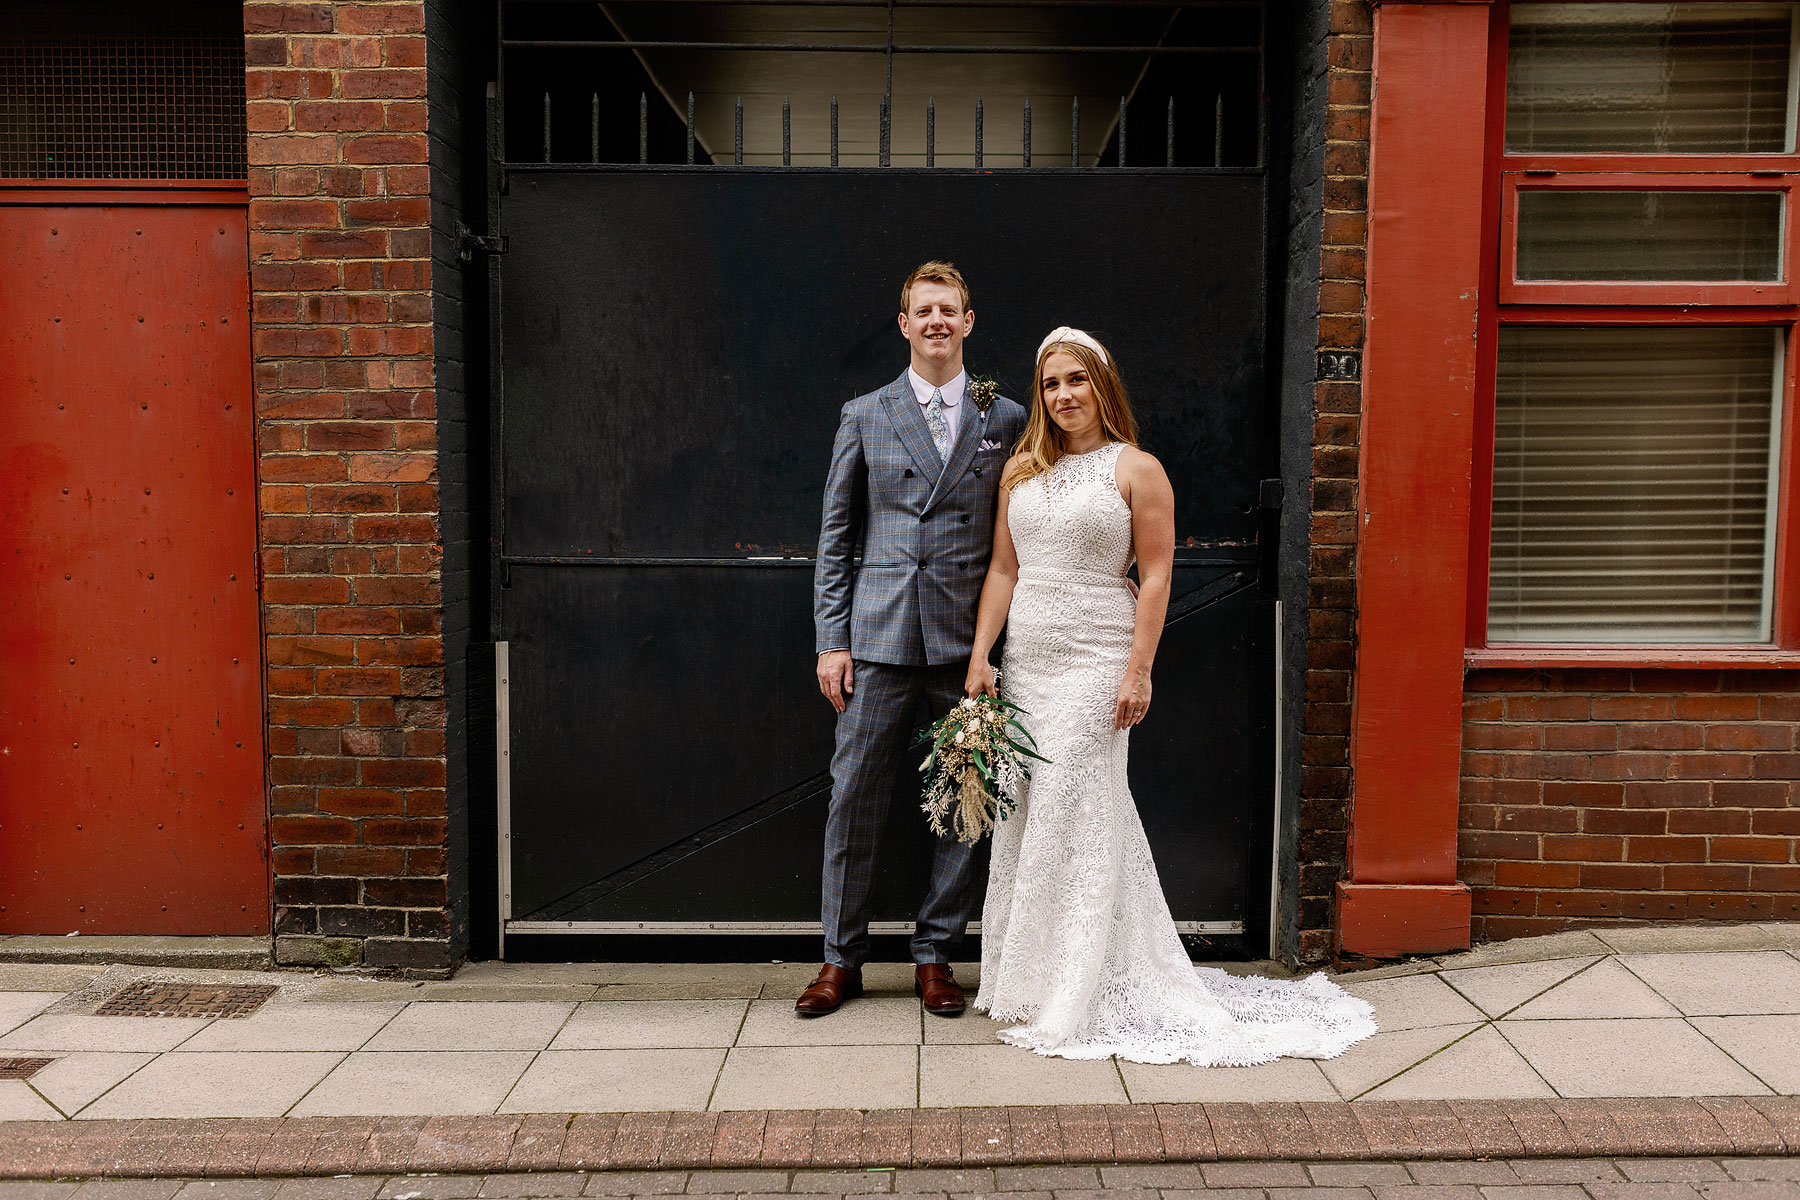 Urban bride and groom portrait in Leeds City Centre